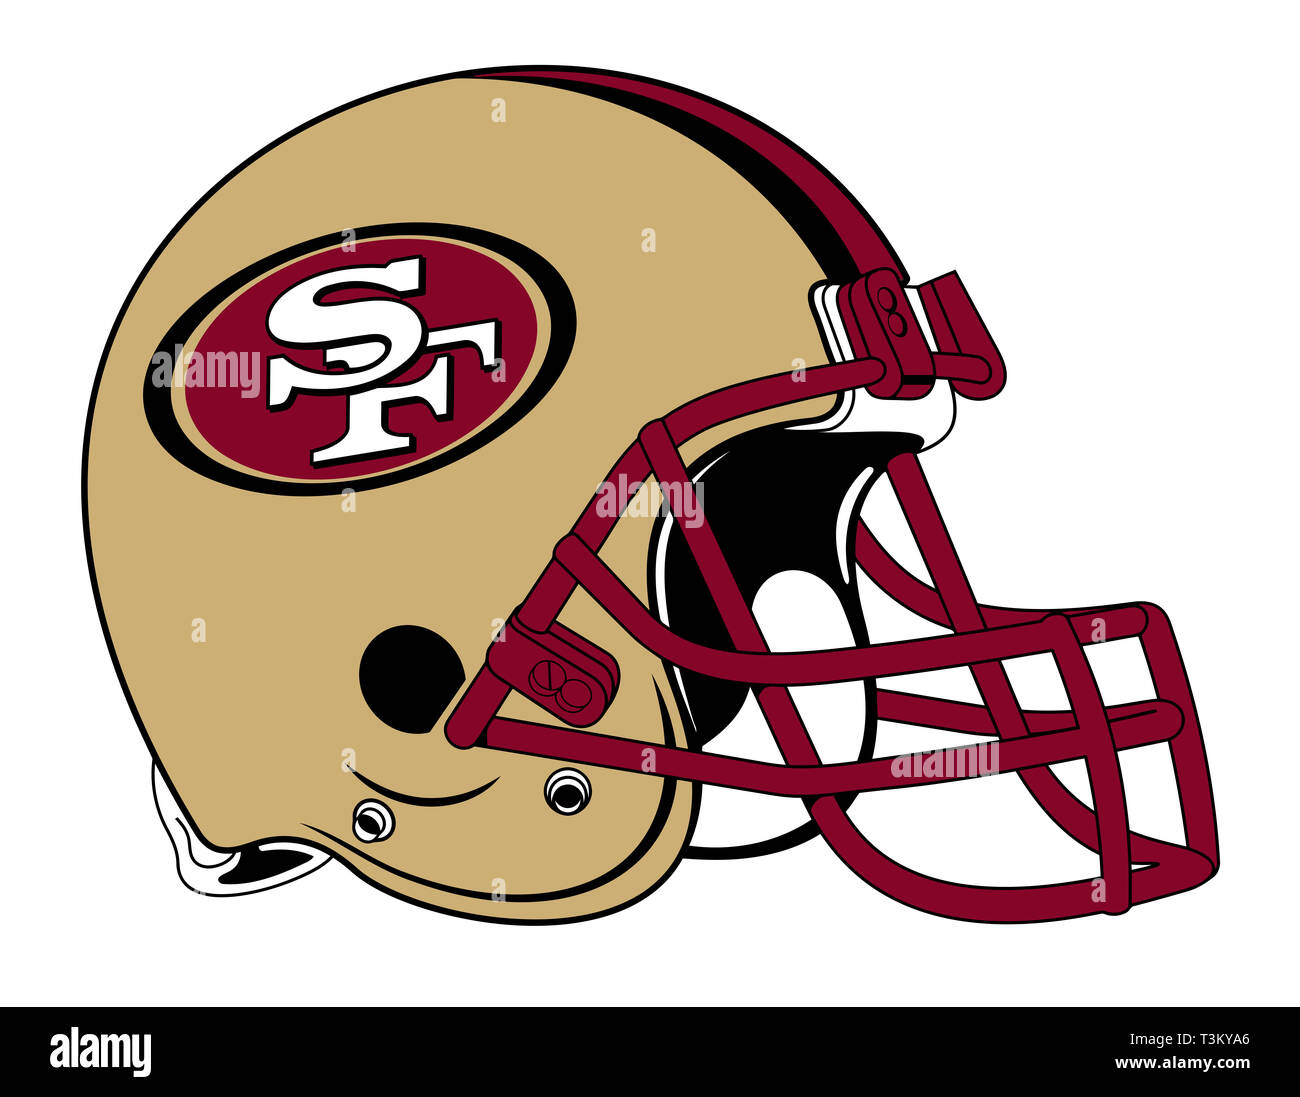 san francisco 49ers helmet team sport equipment illustration Stock Photo